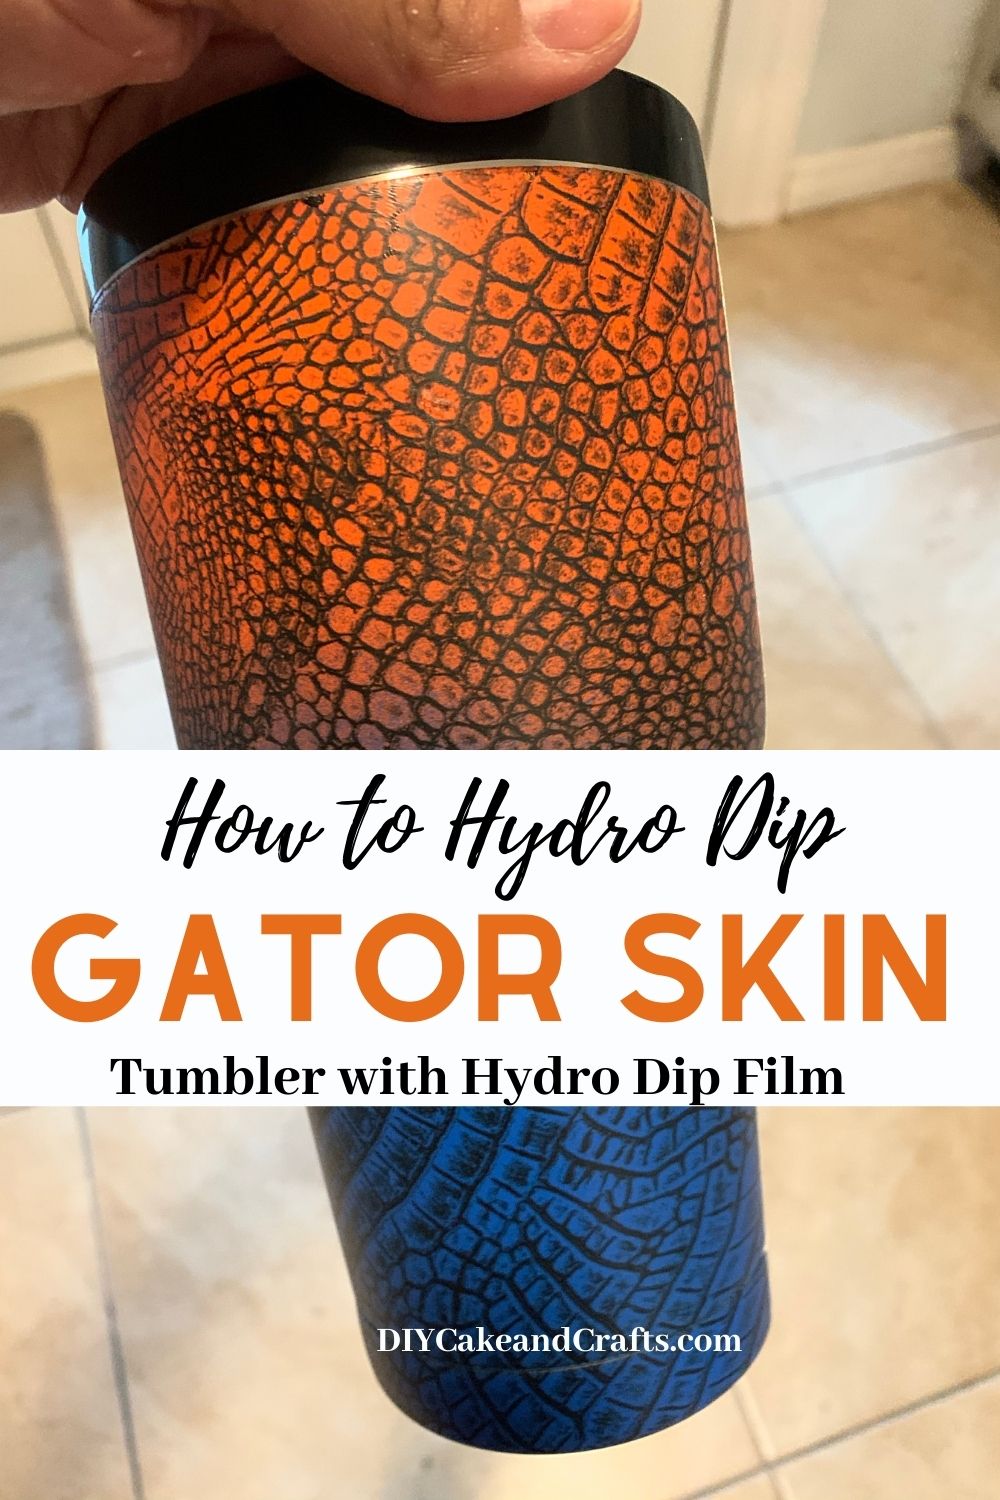 how-to-hydro-dip-gator-skin-tumbler-with-hydro-dip-film